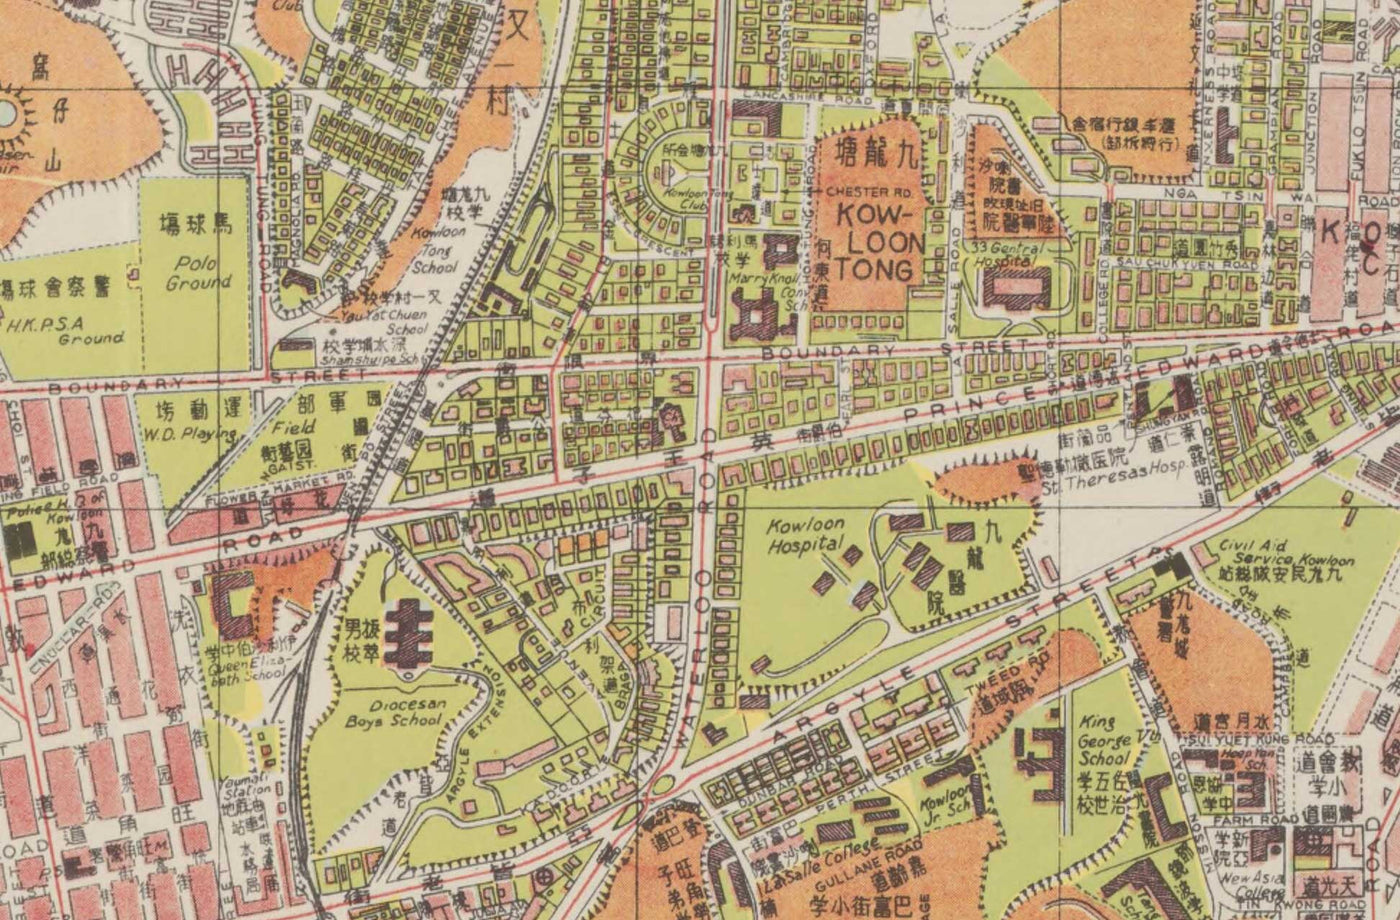 Old Map of Hong Kong (Kowloon), 1957 by Chan King Hon - Yau Ma Tei, Mong Kok, Kowloon City, King's Park, Yau Yat Chuen